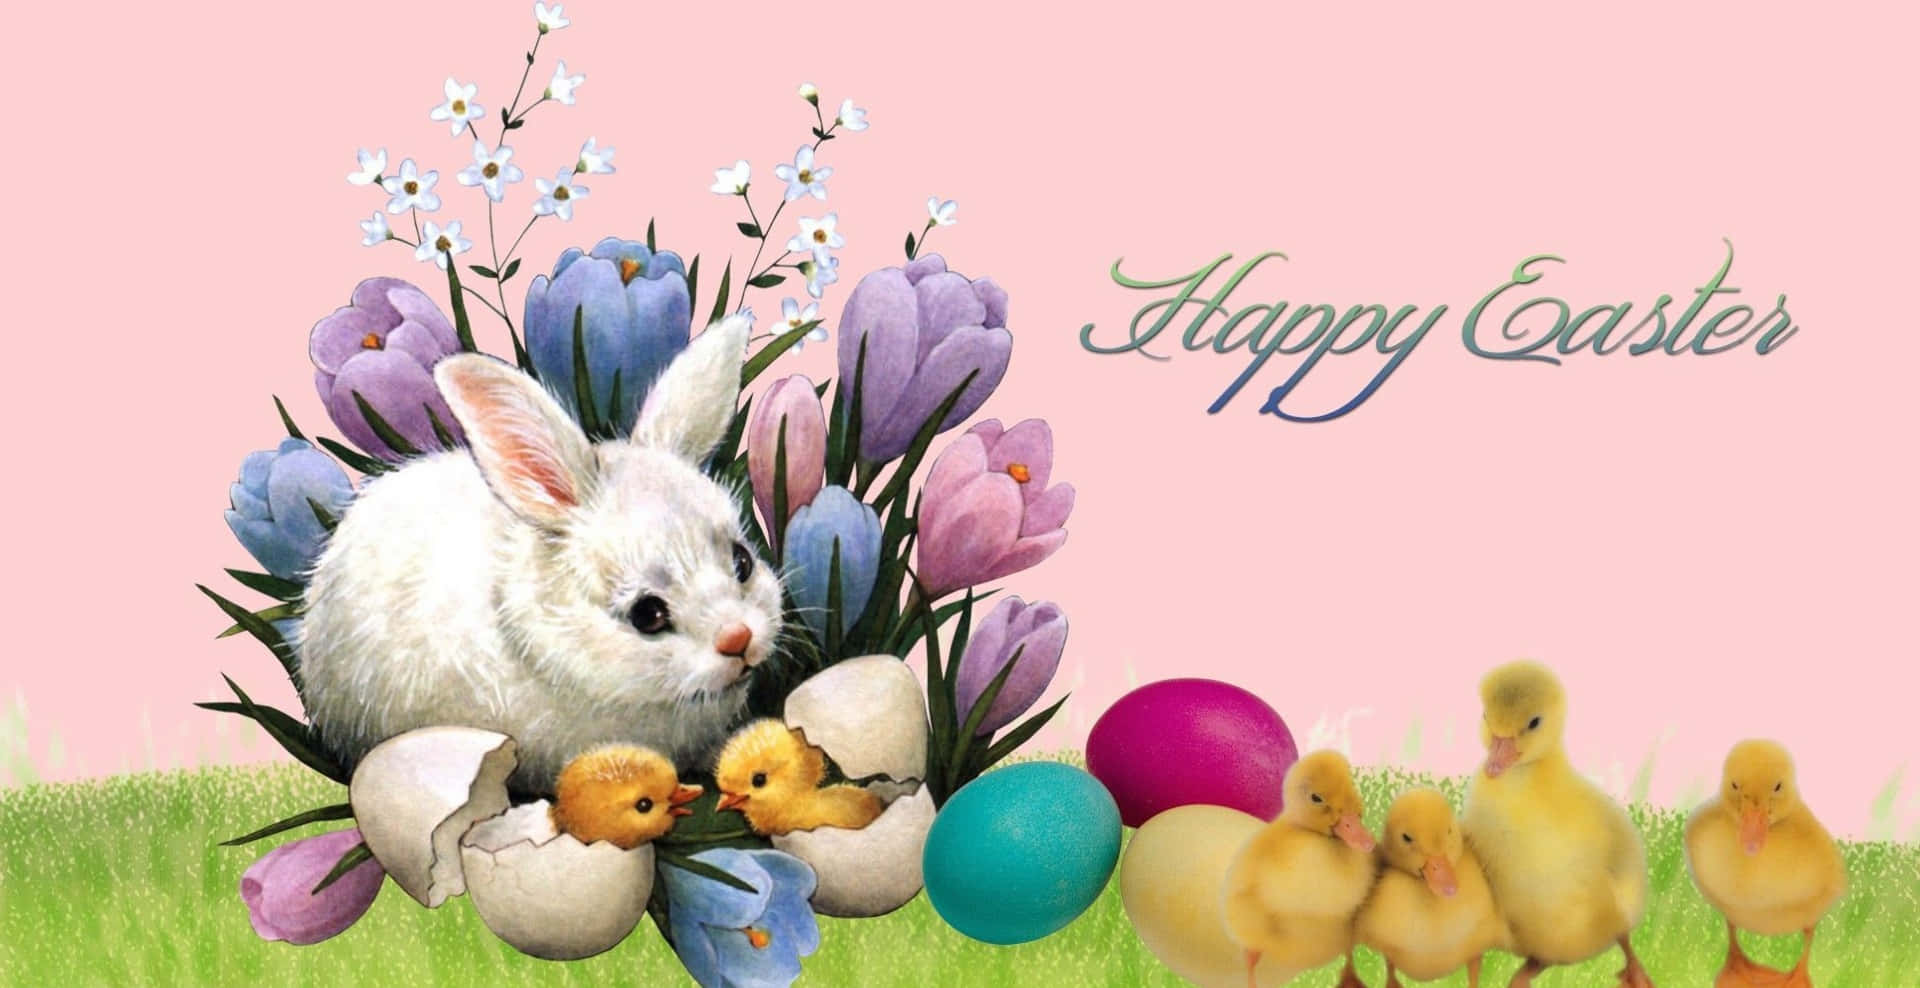 Free Easter Bunny Picture, Easter Bunny Picture for FREE